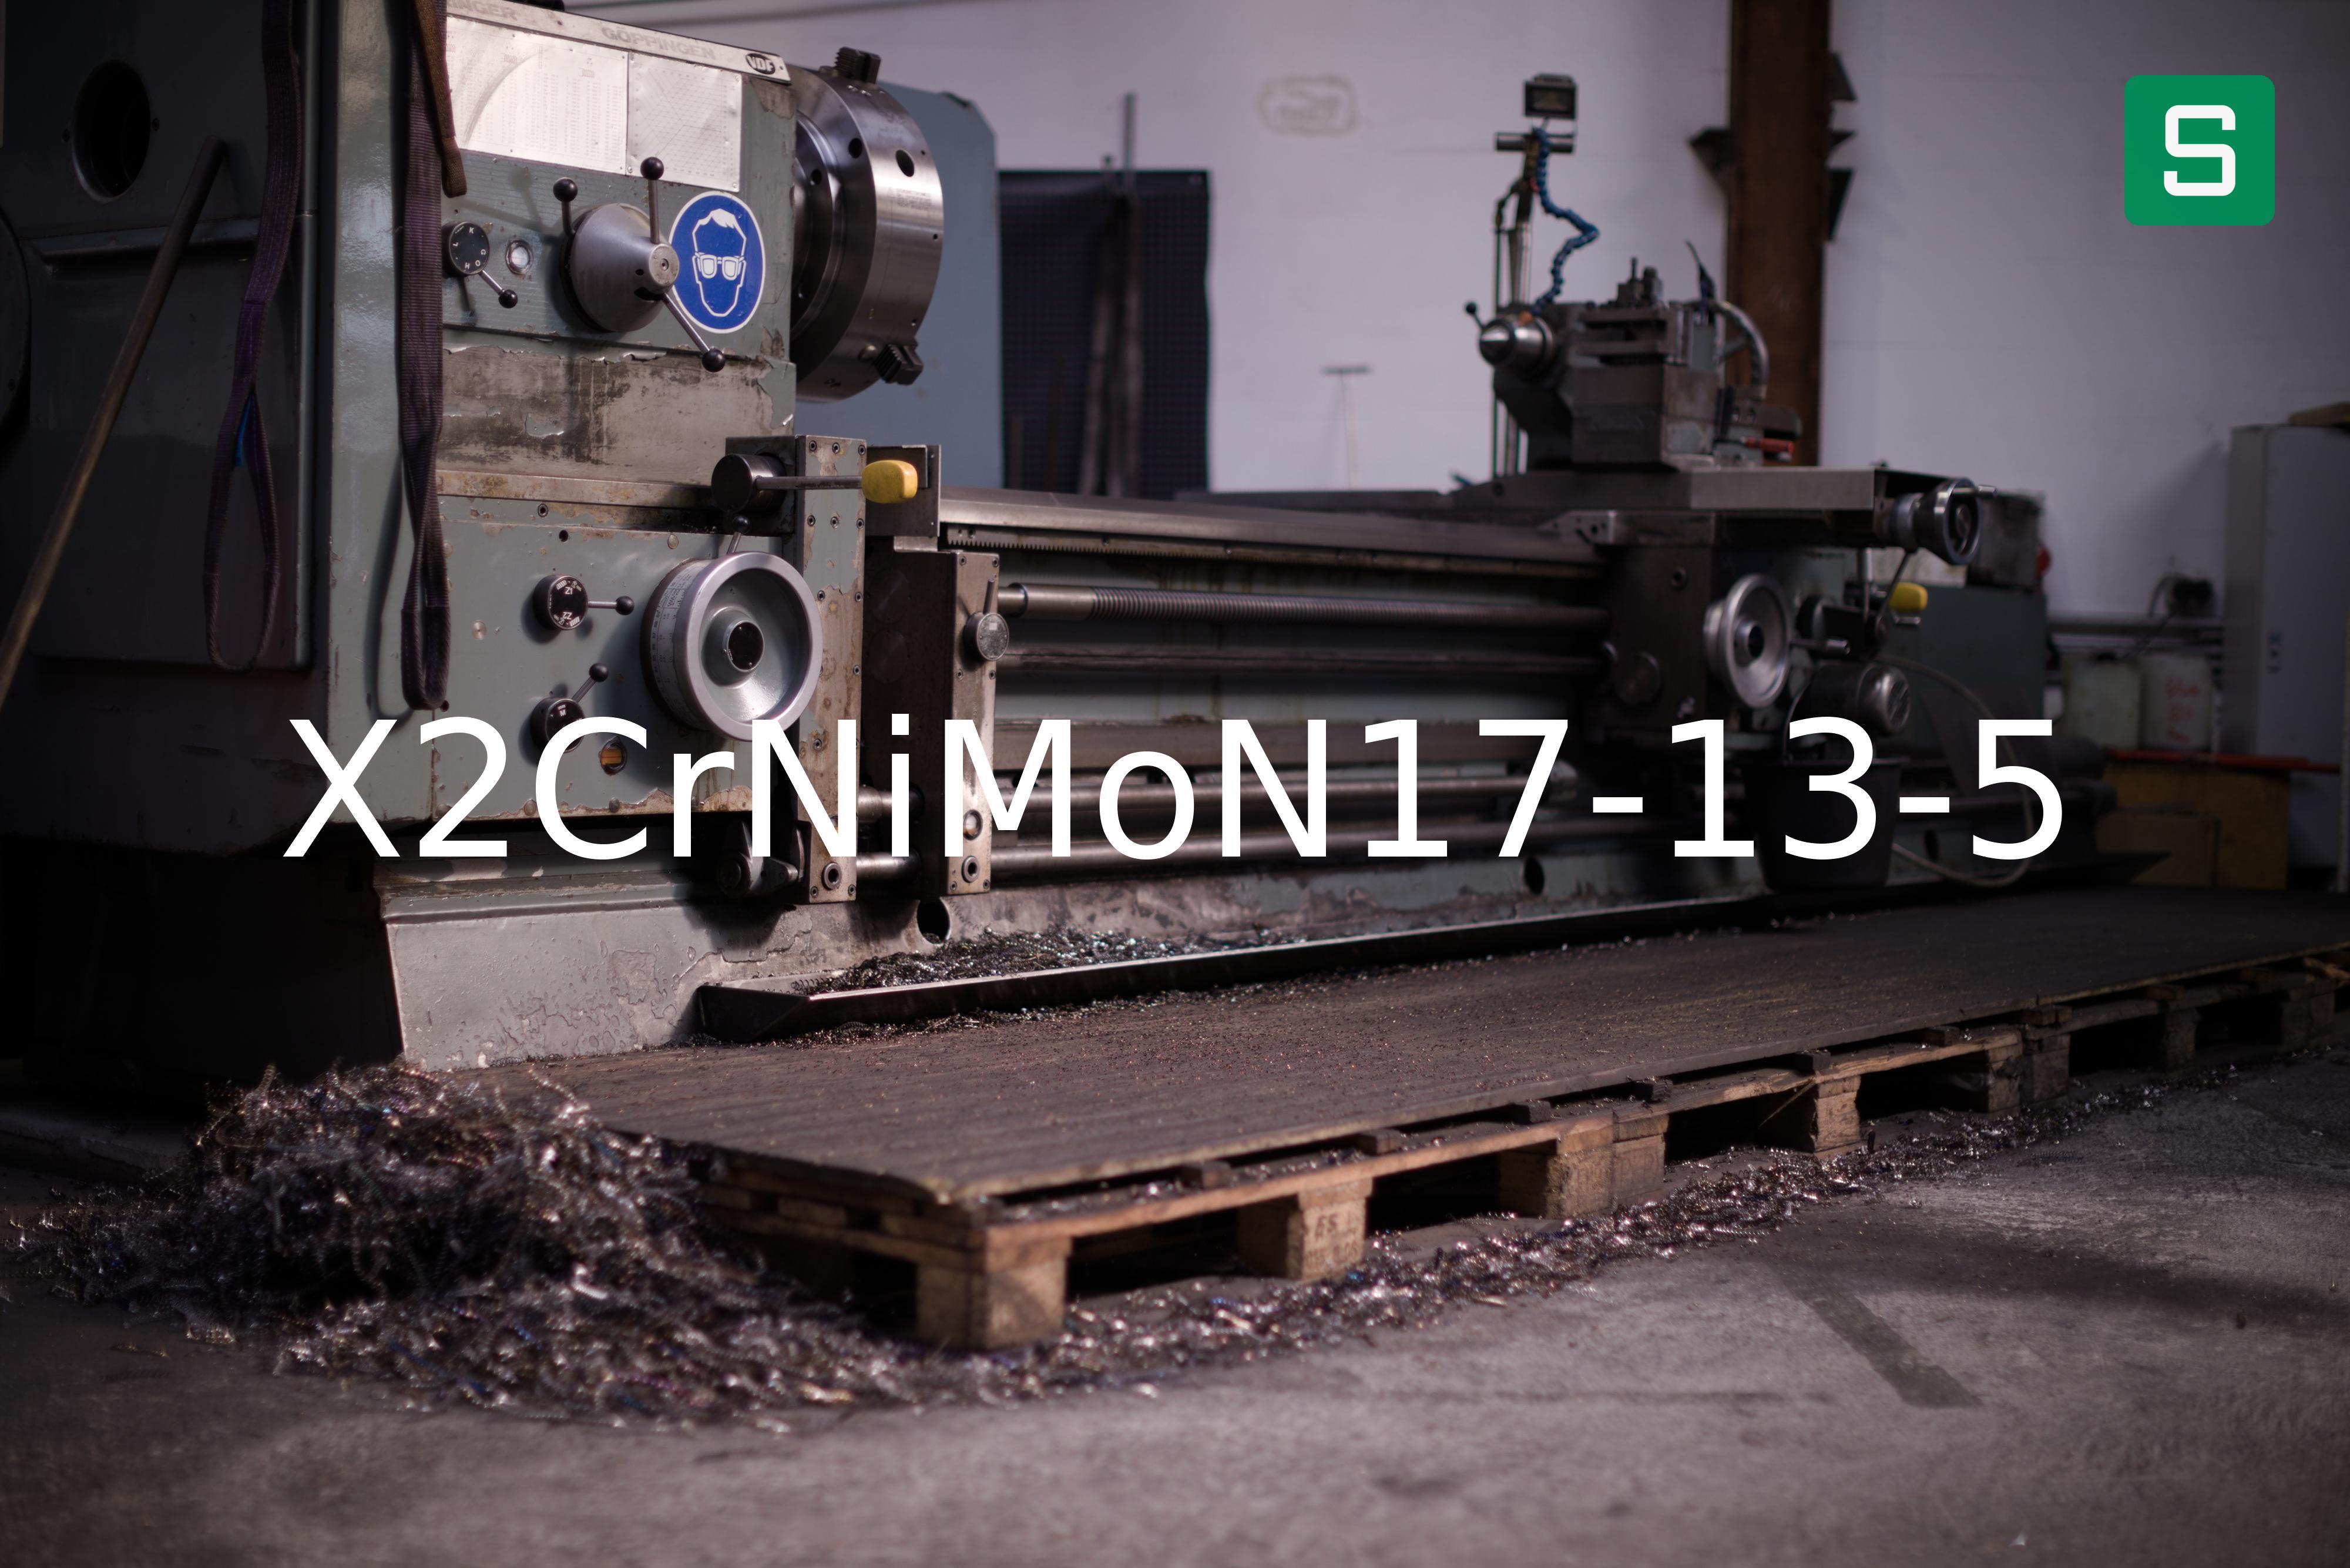 Steel Material: X2CrNiMoN17-13-5